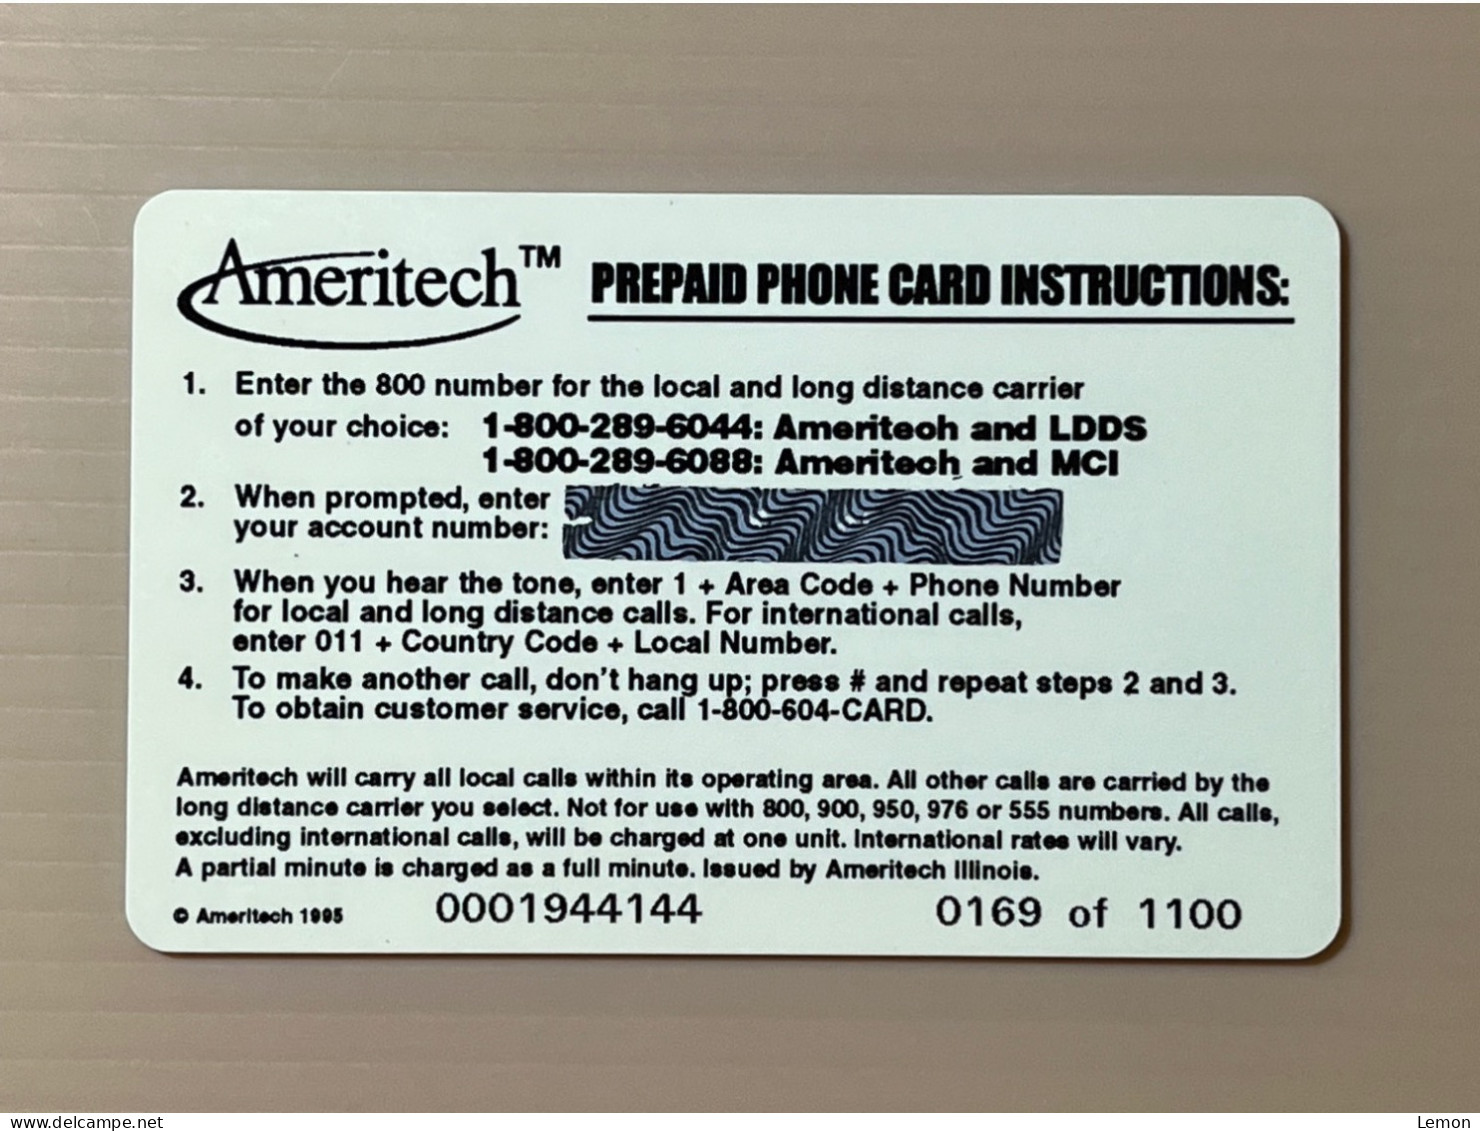 Mint USA UNITED STATES America Prepaid Telecard Phonecard, Ameritech Happy Holidays Flower(1100EX), Set Of 1 Mint Card - Colecciones